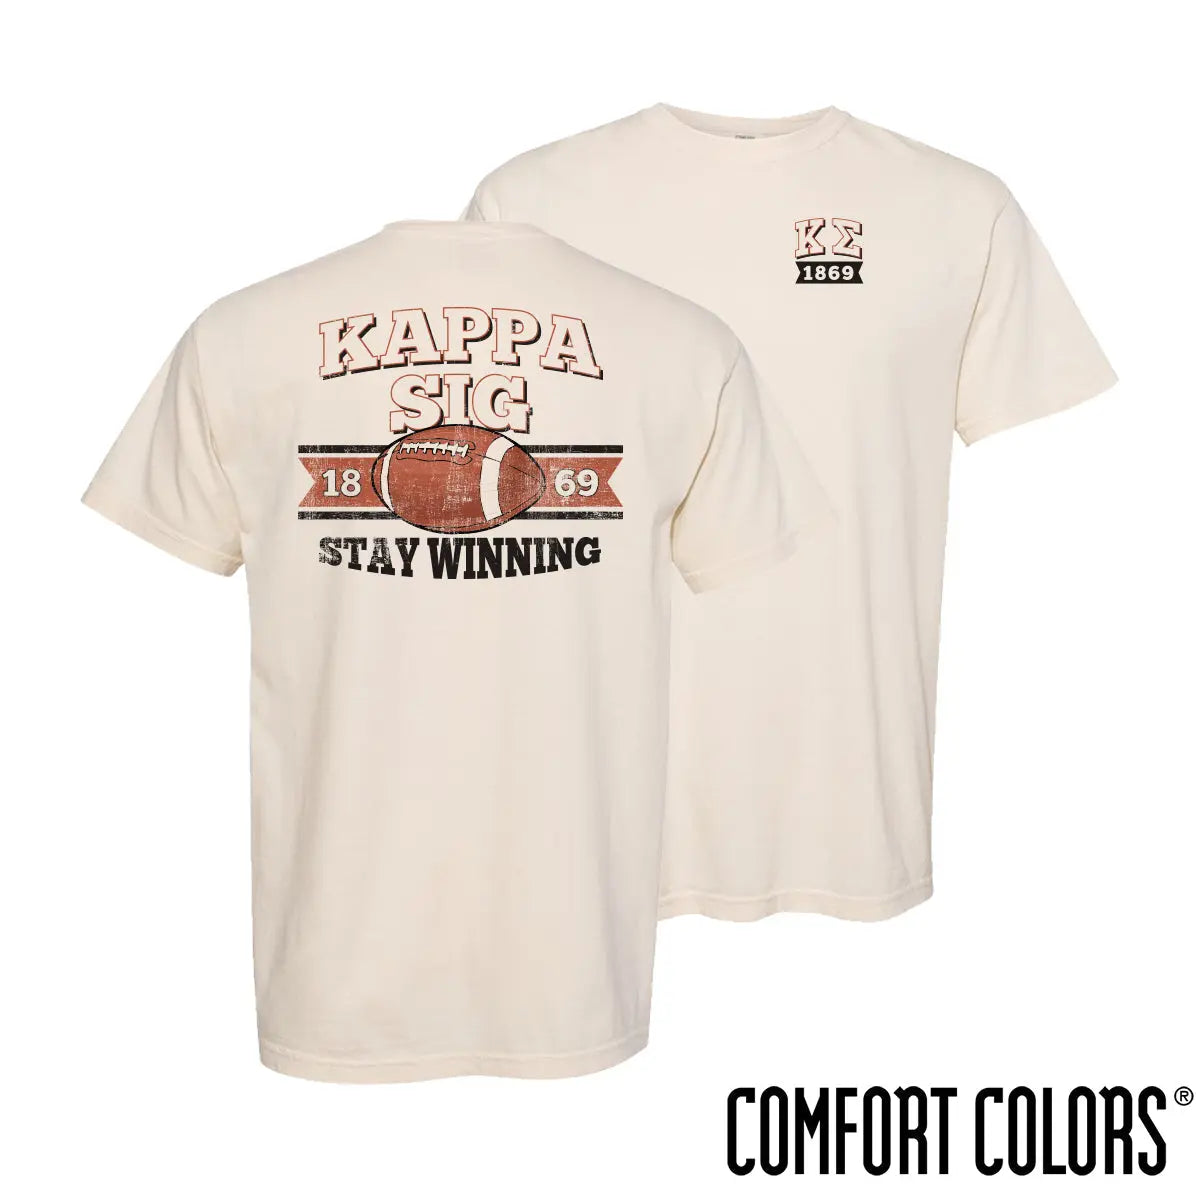 Kappa Sig Comfort Colors Stay Winning Football Short Sleeve Tee - Kappa Sigma Official Store